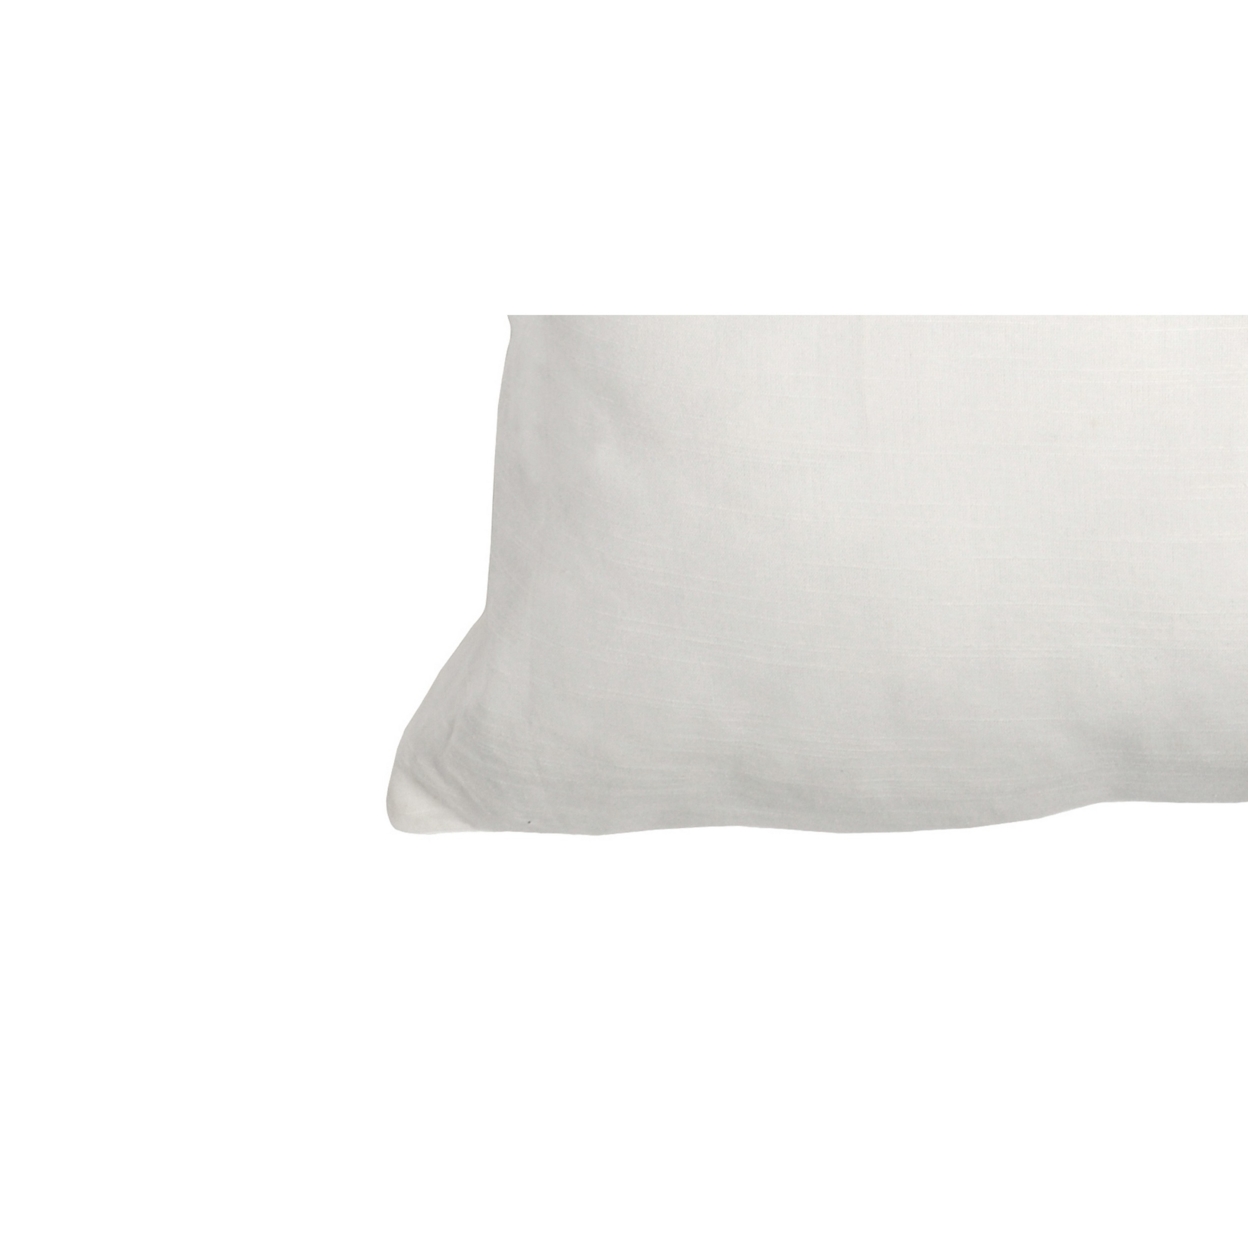 Lenz 26 Inch Cotton Standard Pillow Sham, Hand Stitched Embroidery, Ivory- Saltoro Sherpi